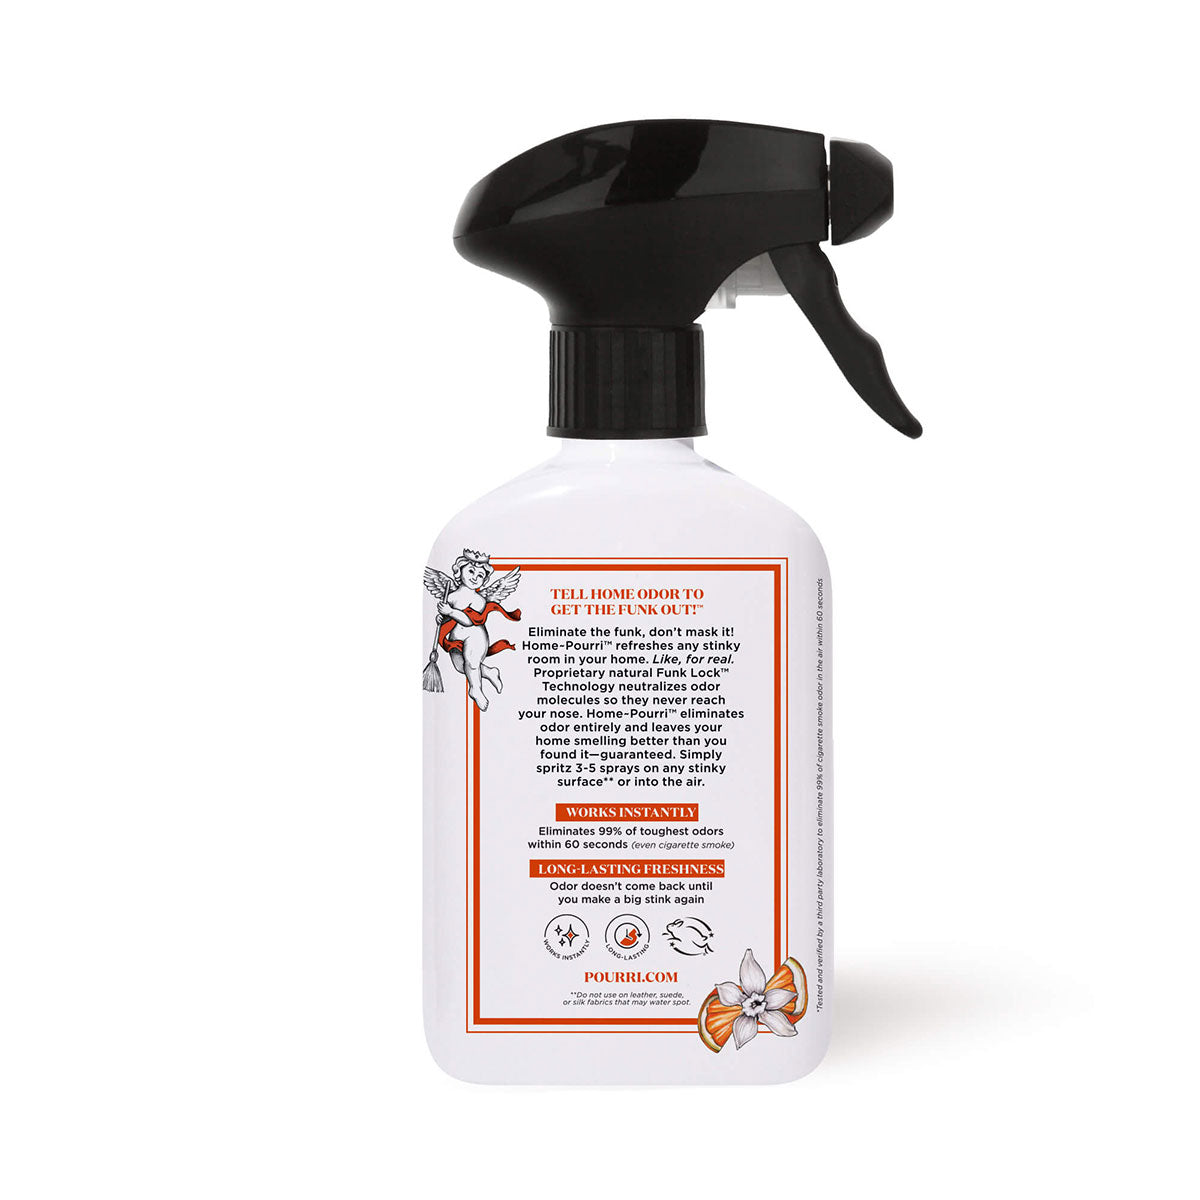 Home-Pourri Deodorizing Spray by Poo-Pourri - Grapefruit Lychee Vanilla